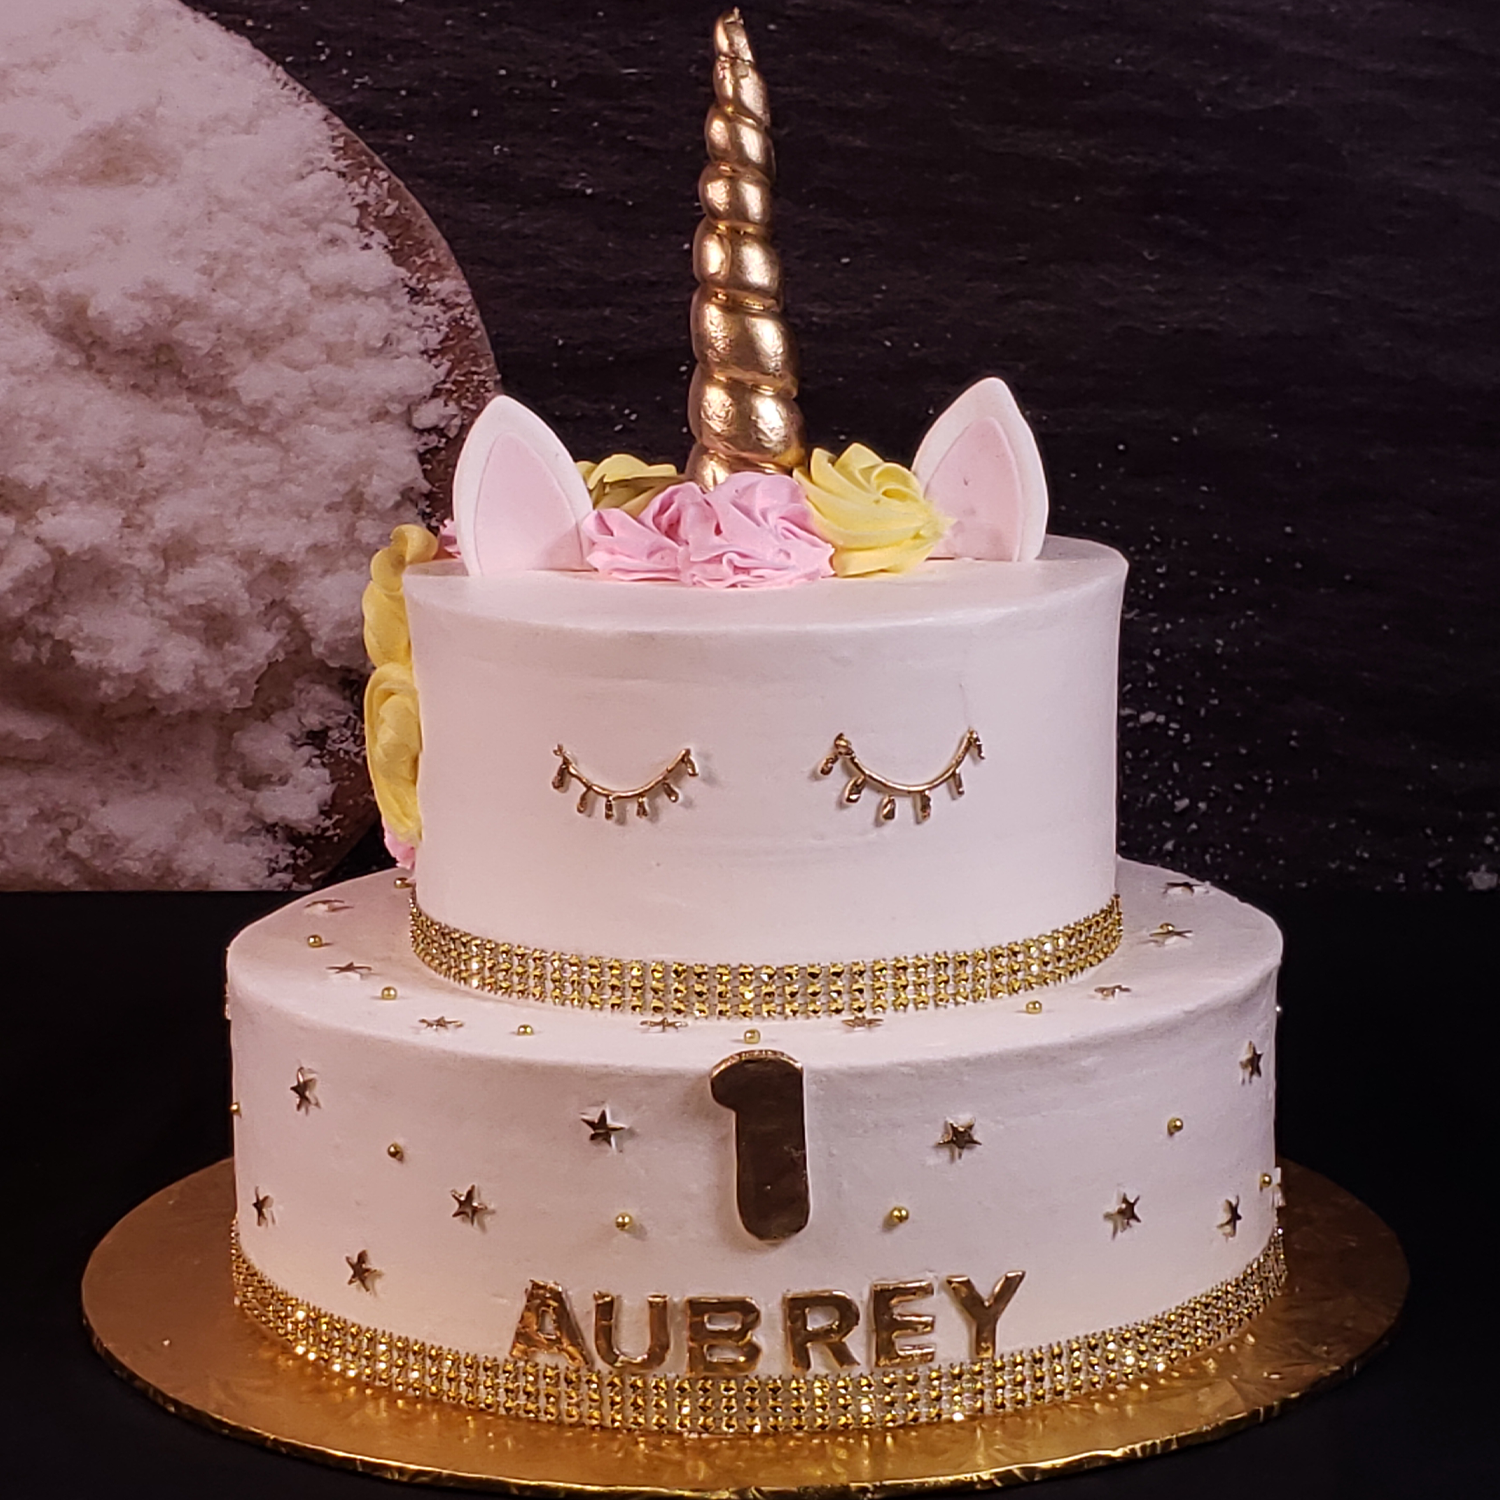 2 Tier Unicorn Gold Birthday Cake | Susie's Cakes